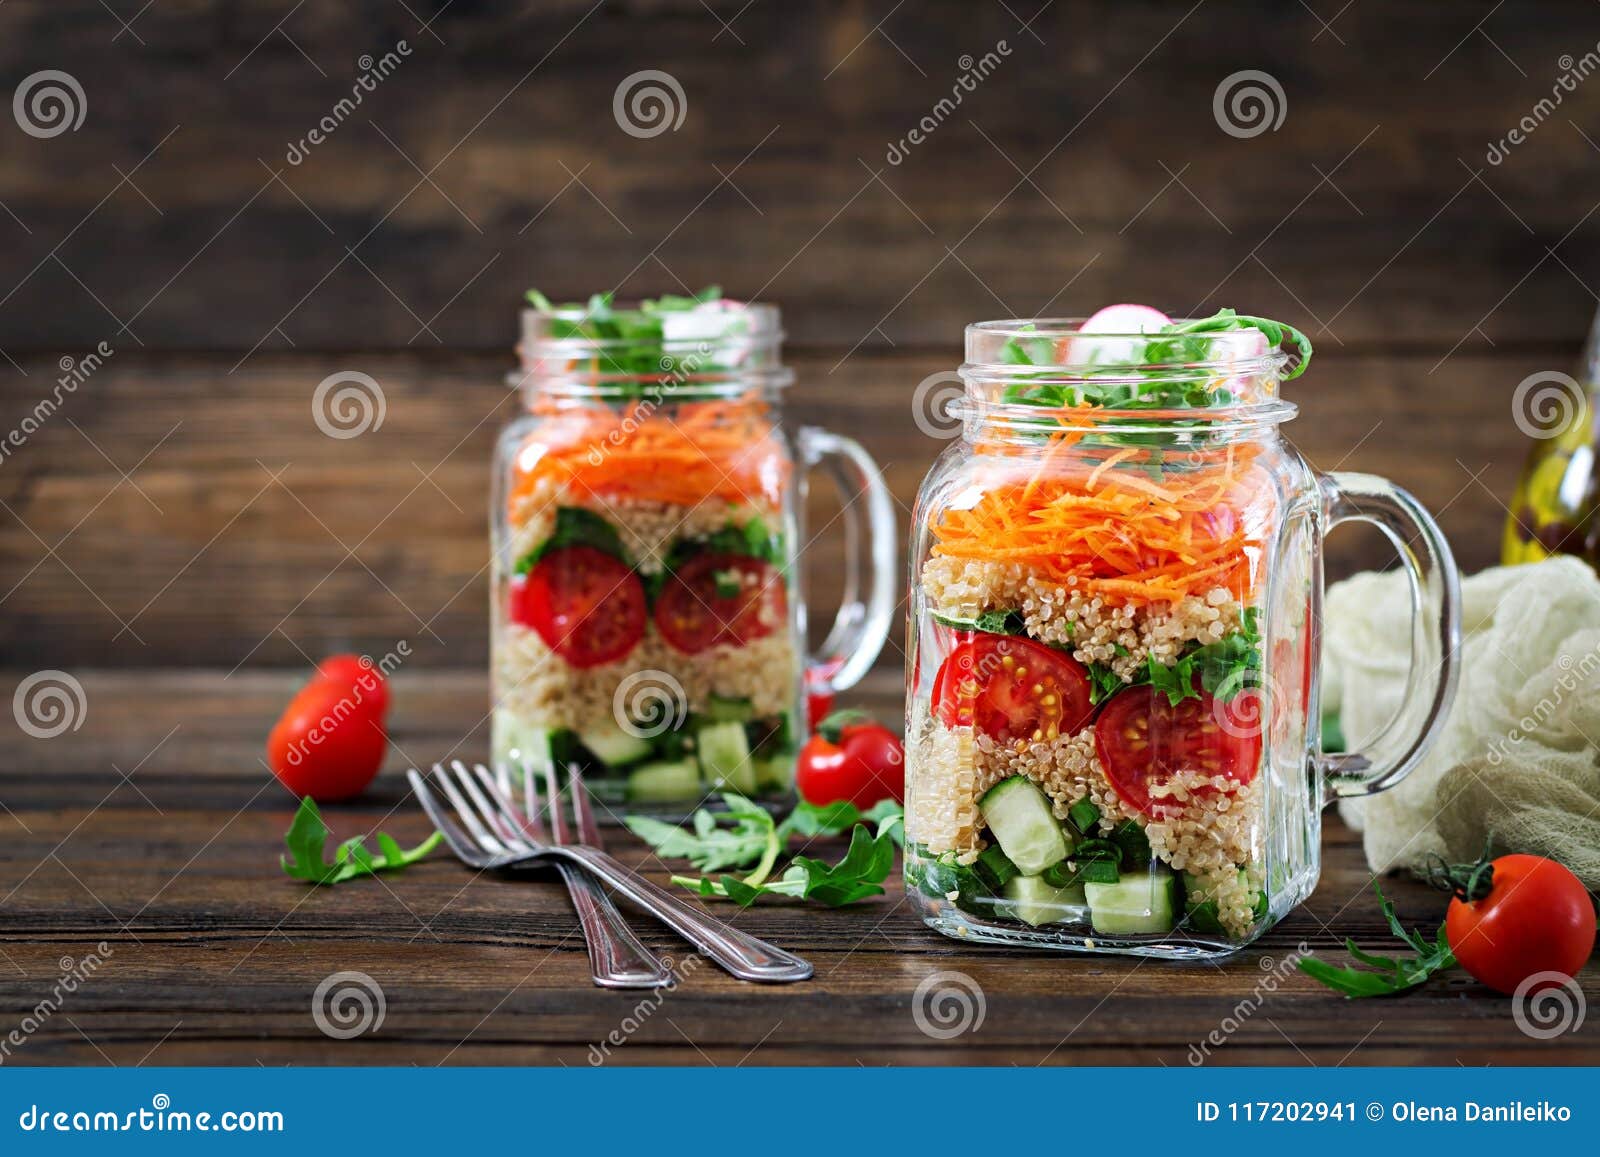 salads with quinoa, arugula, radish, tomatoes and cucumber